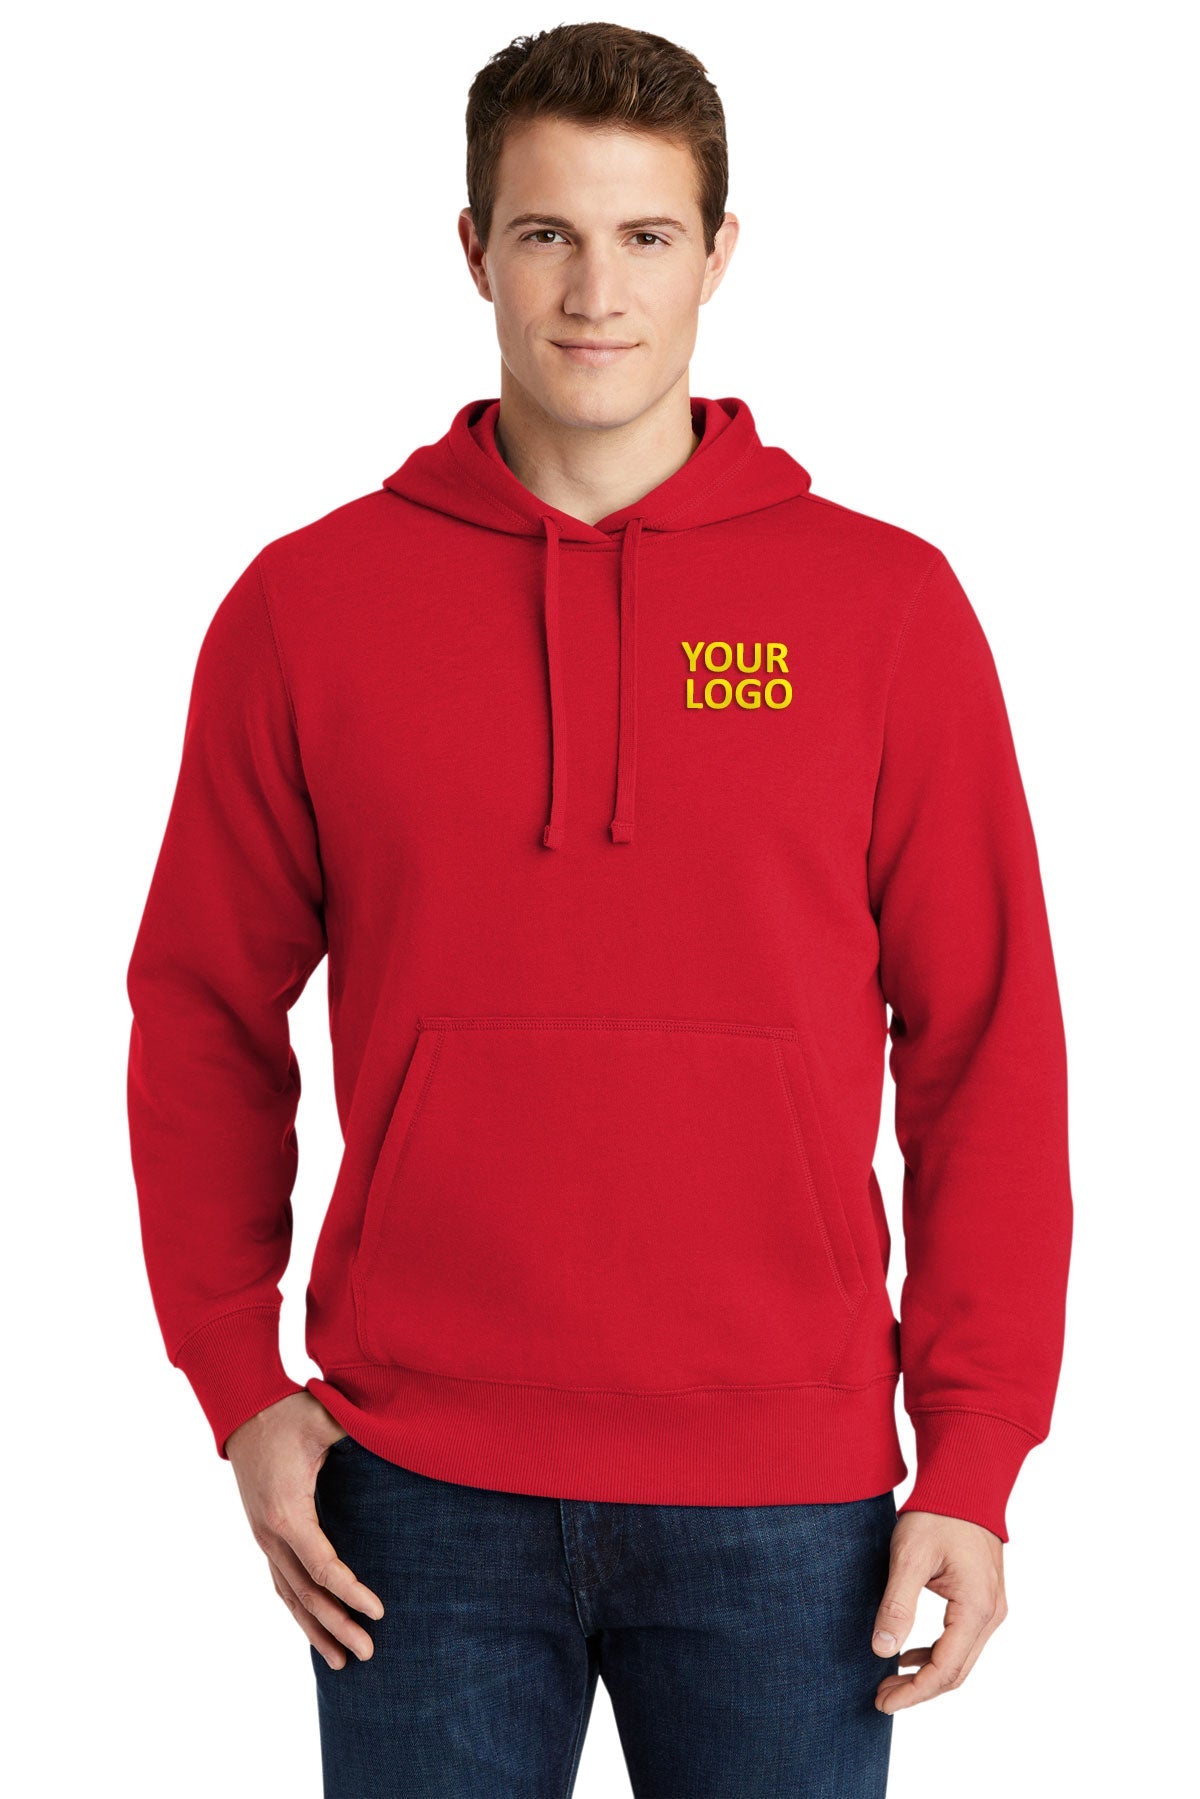 Sport-Tek True Red ST254 sweatshirts with logo embroidery